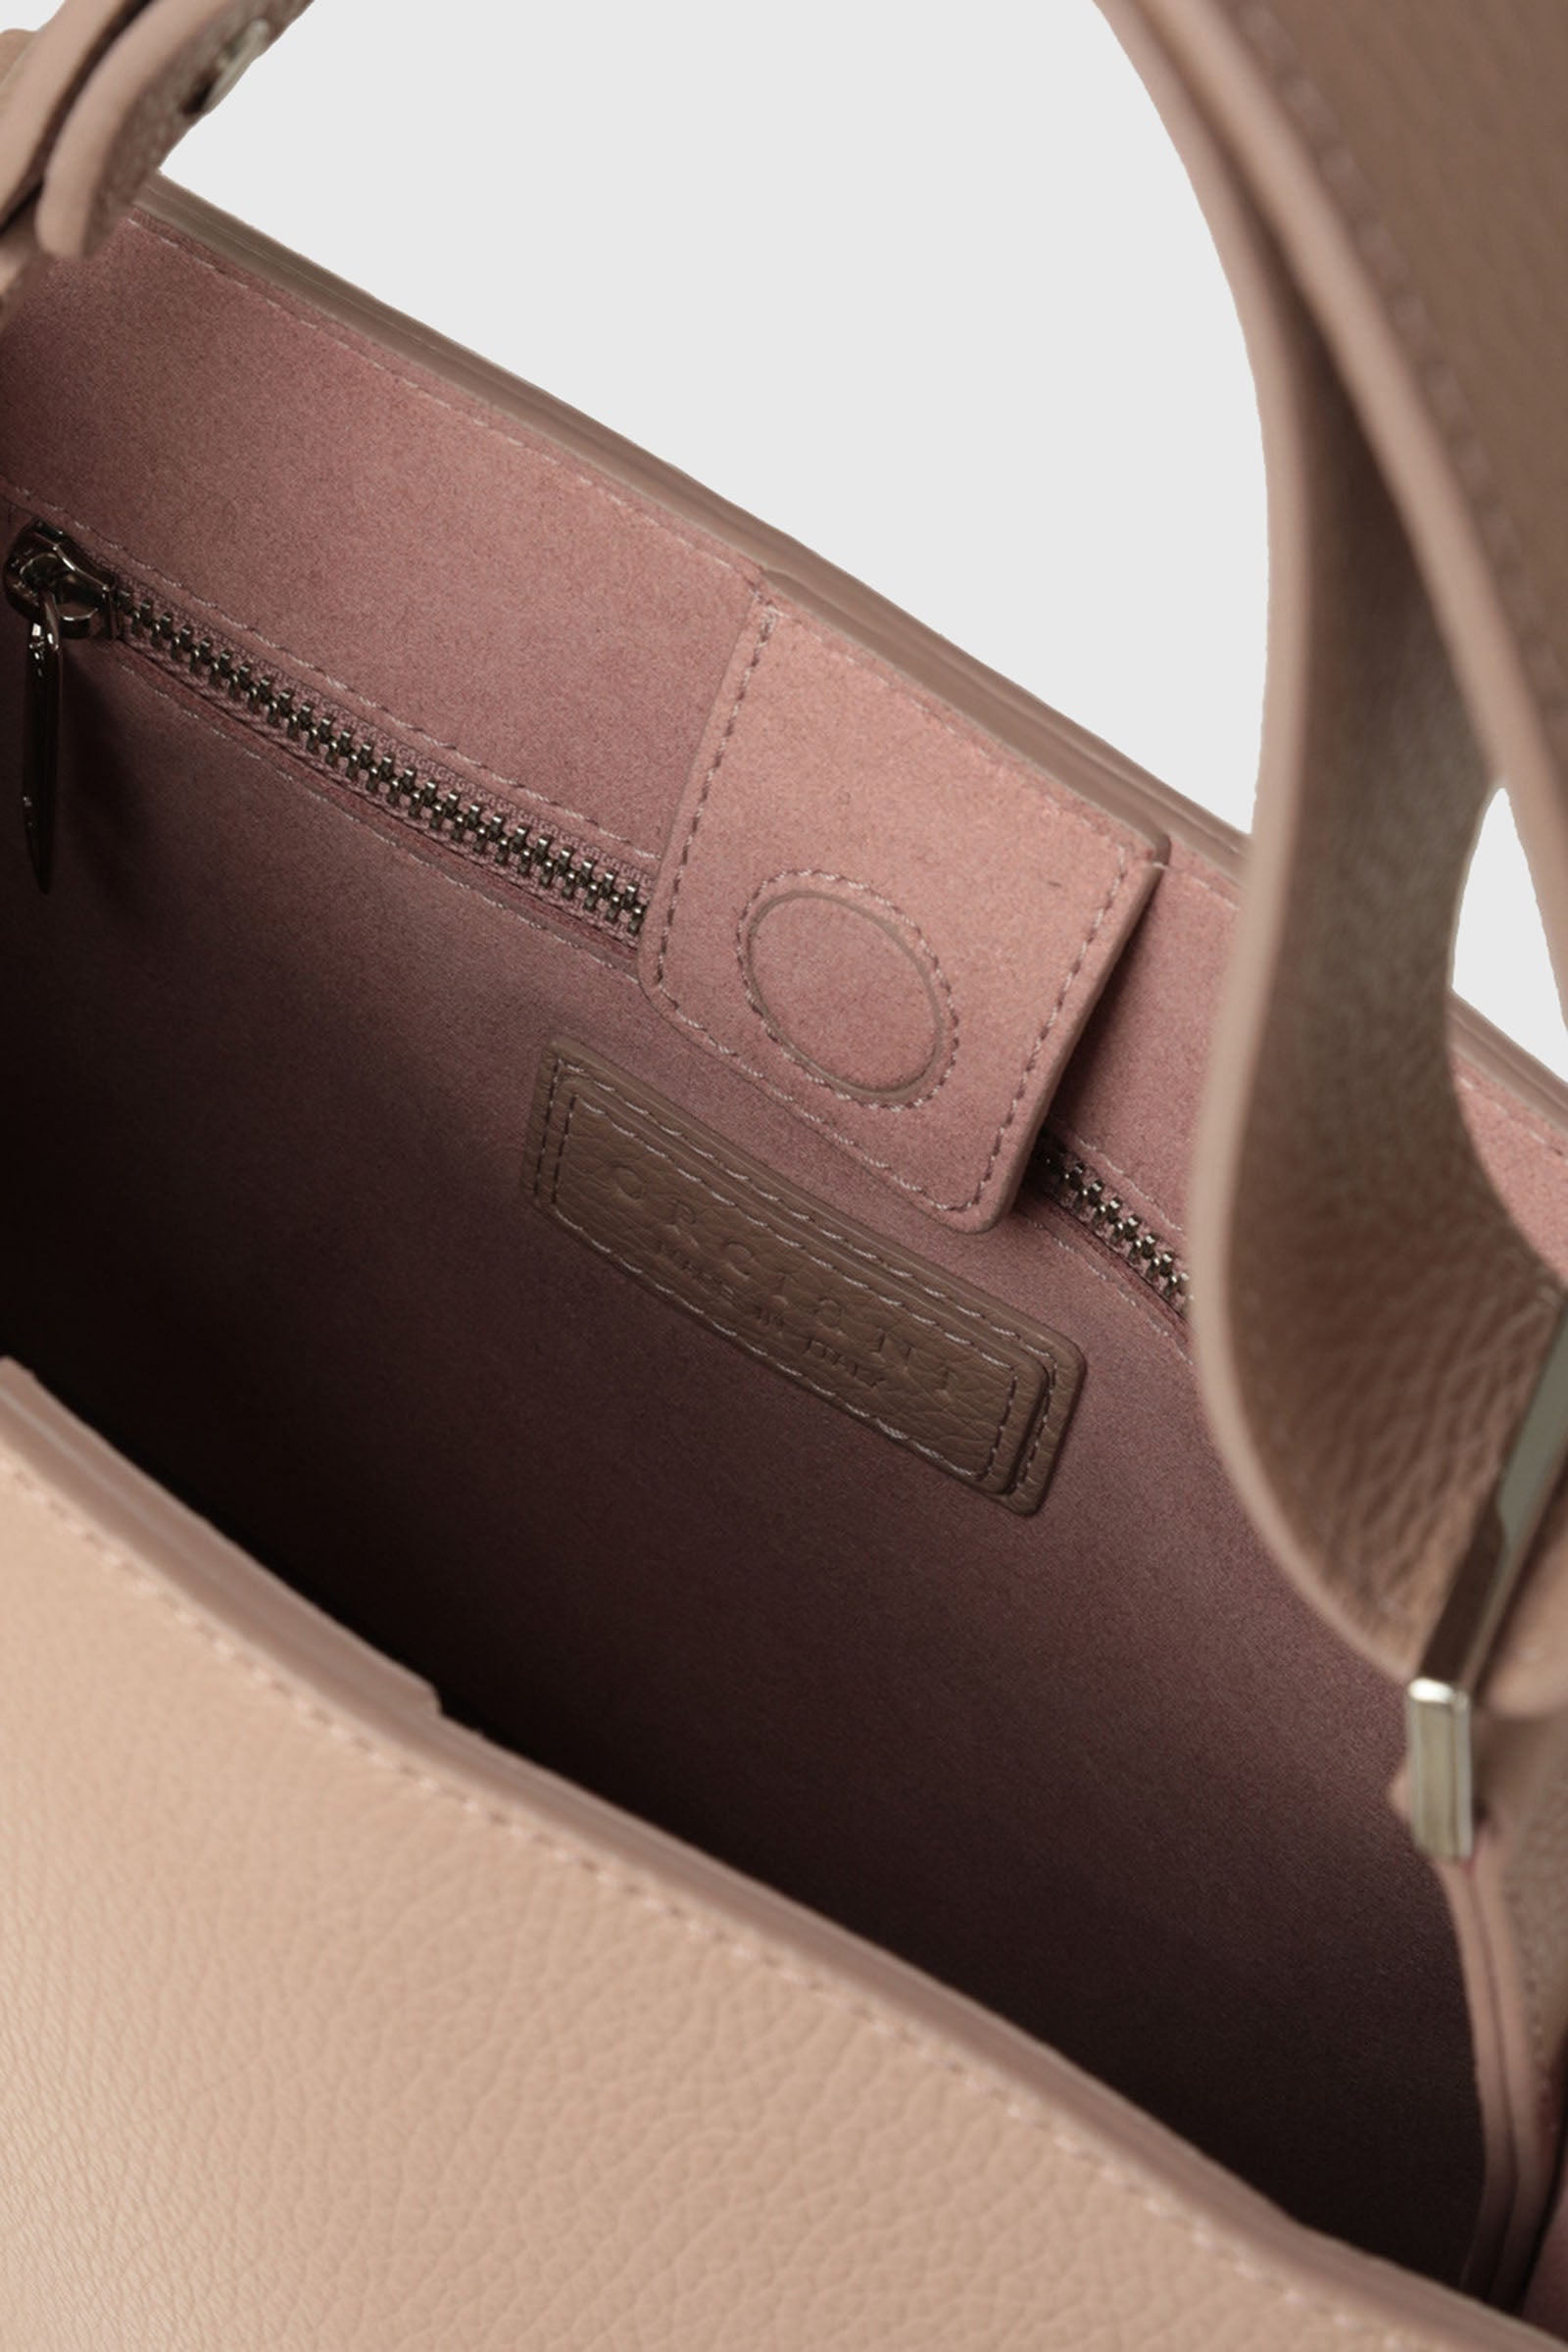 Orciani Sveva Sense Medium Leather Bag in Vintage Pink - 5